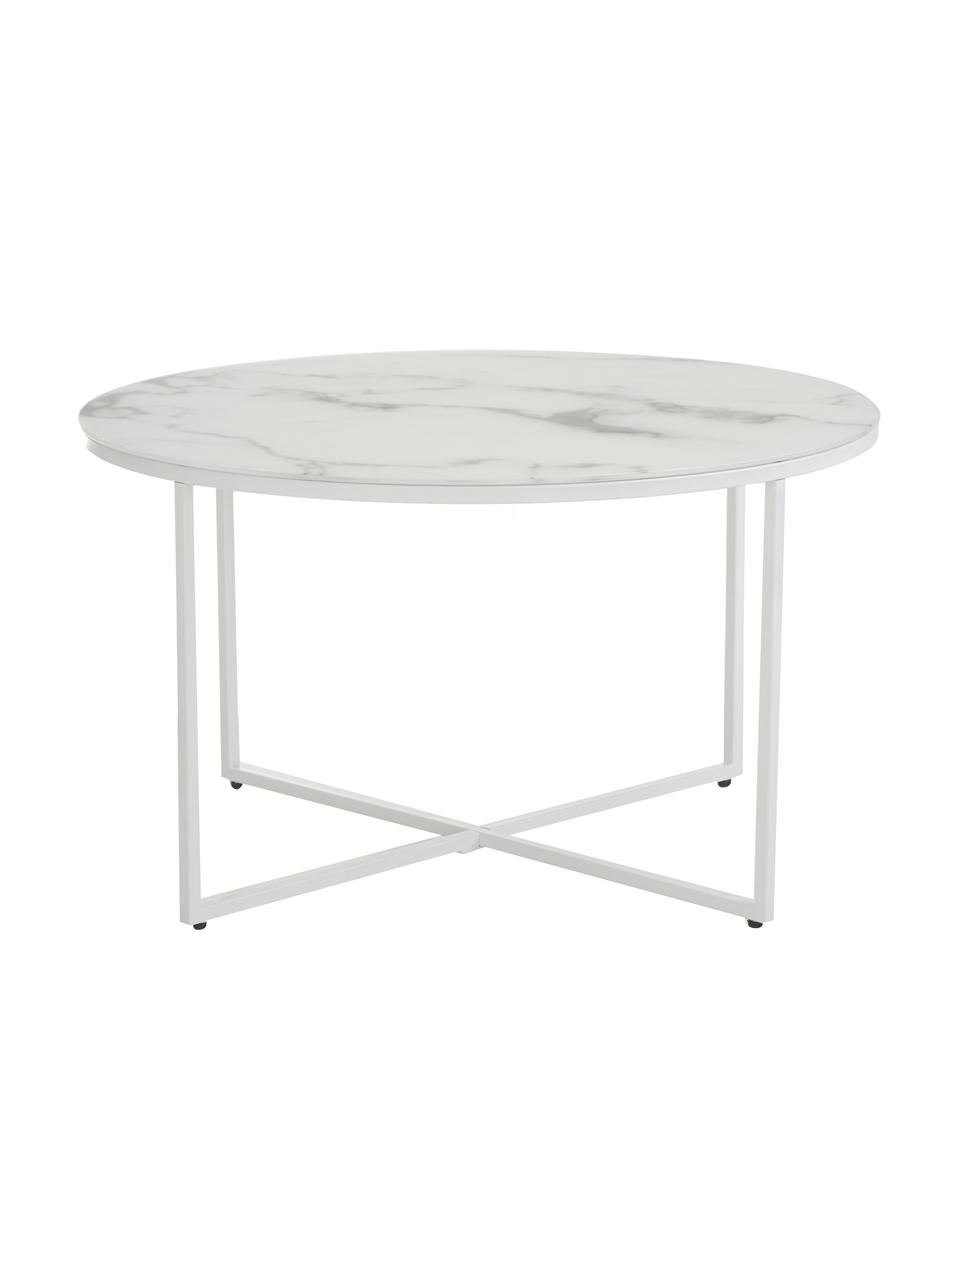 Konferenční stolek s mramorovanou skleněnou deskou Antigua, Bílošedá mramorovaná, bílá, Ø 80 cm, V 45 cm